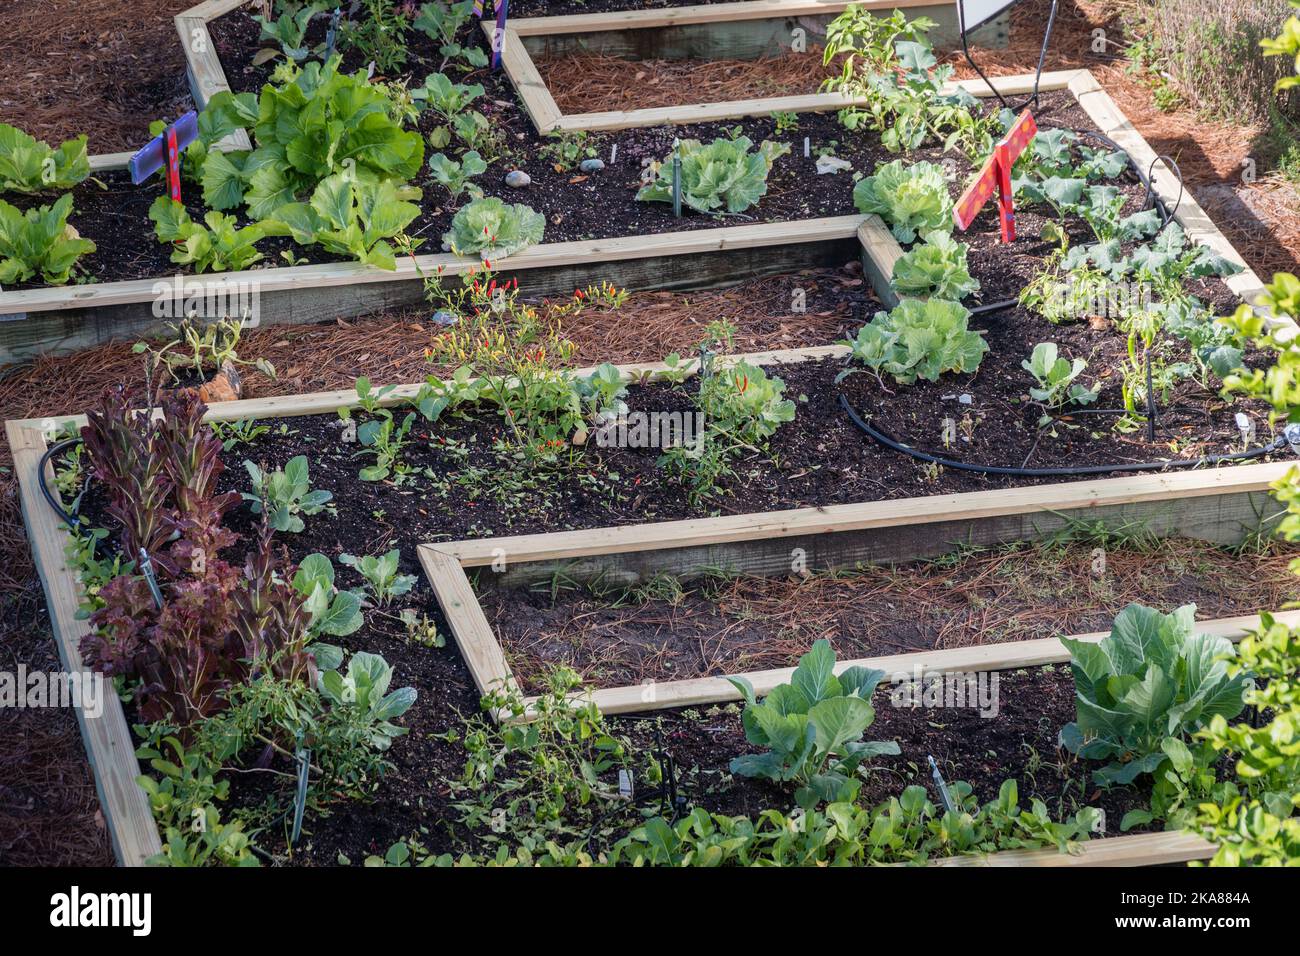 Urban community vegetable garden in raised planter beds. Stock Photo